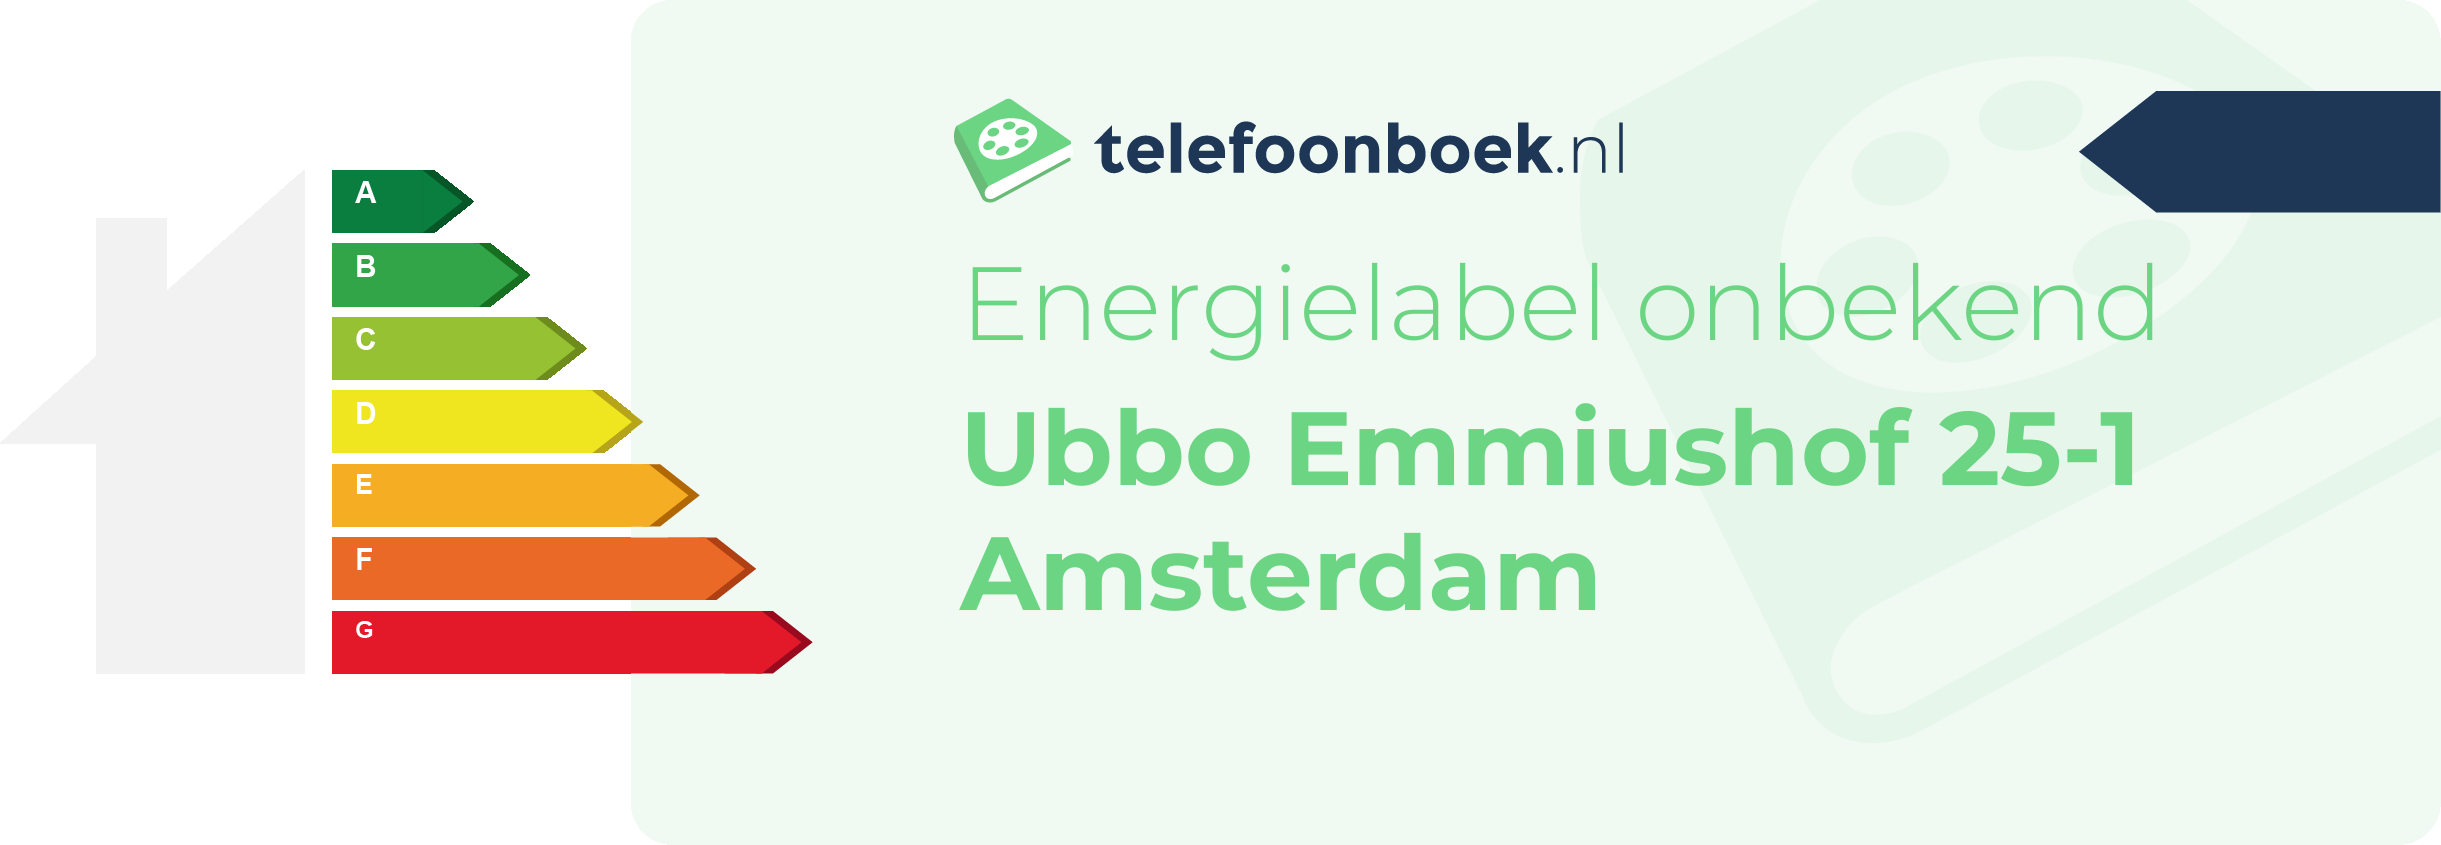 Energielabel Ubbo Emmiushof 25-1 Amsterdam